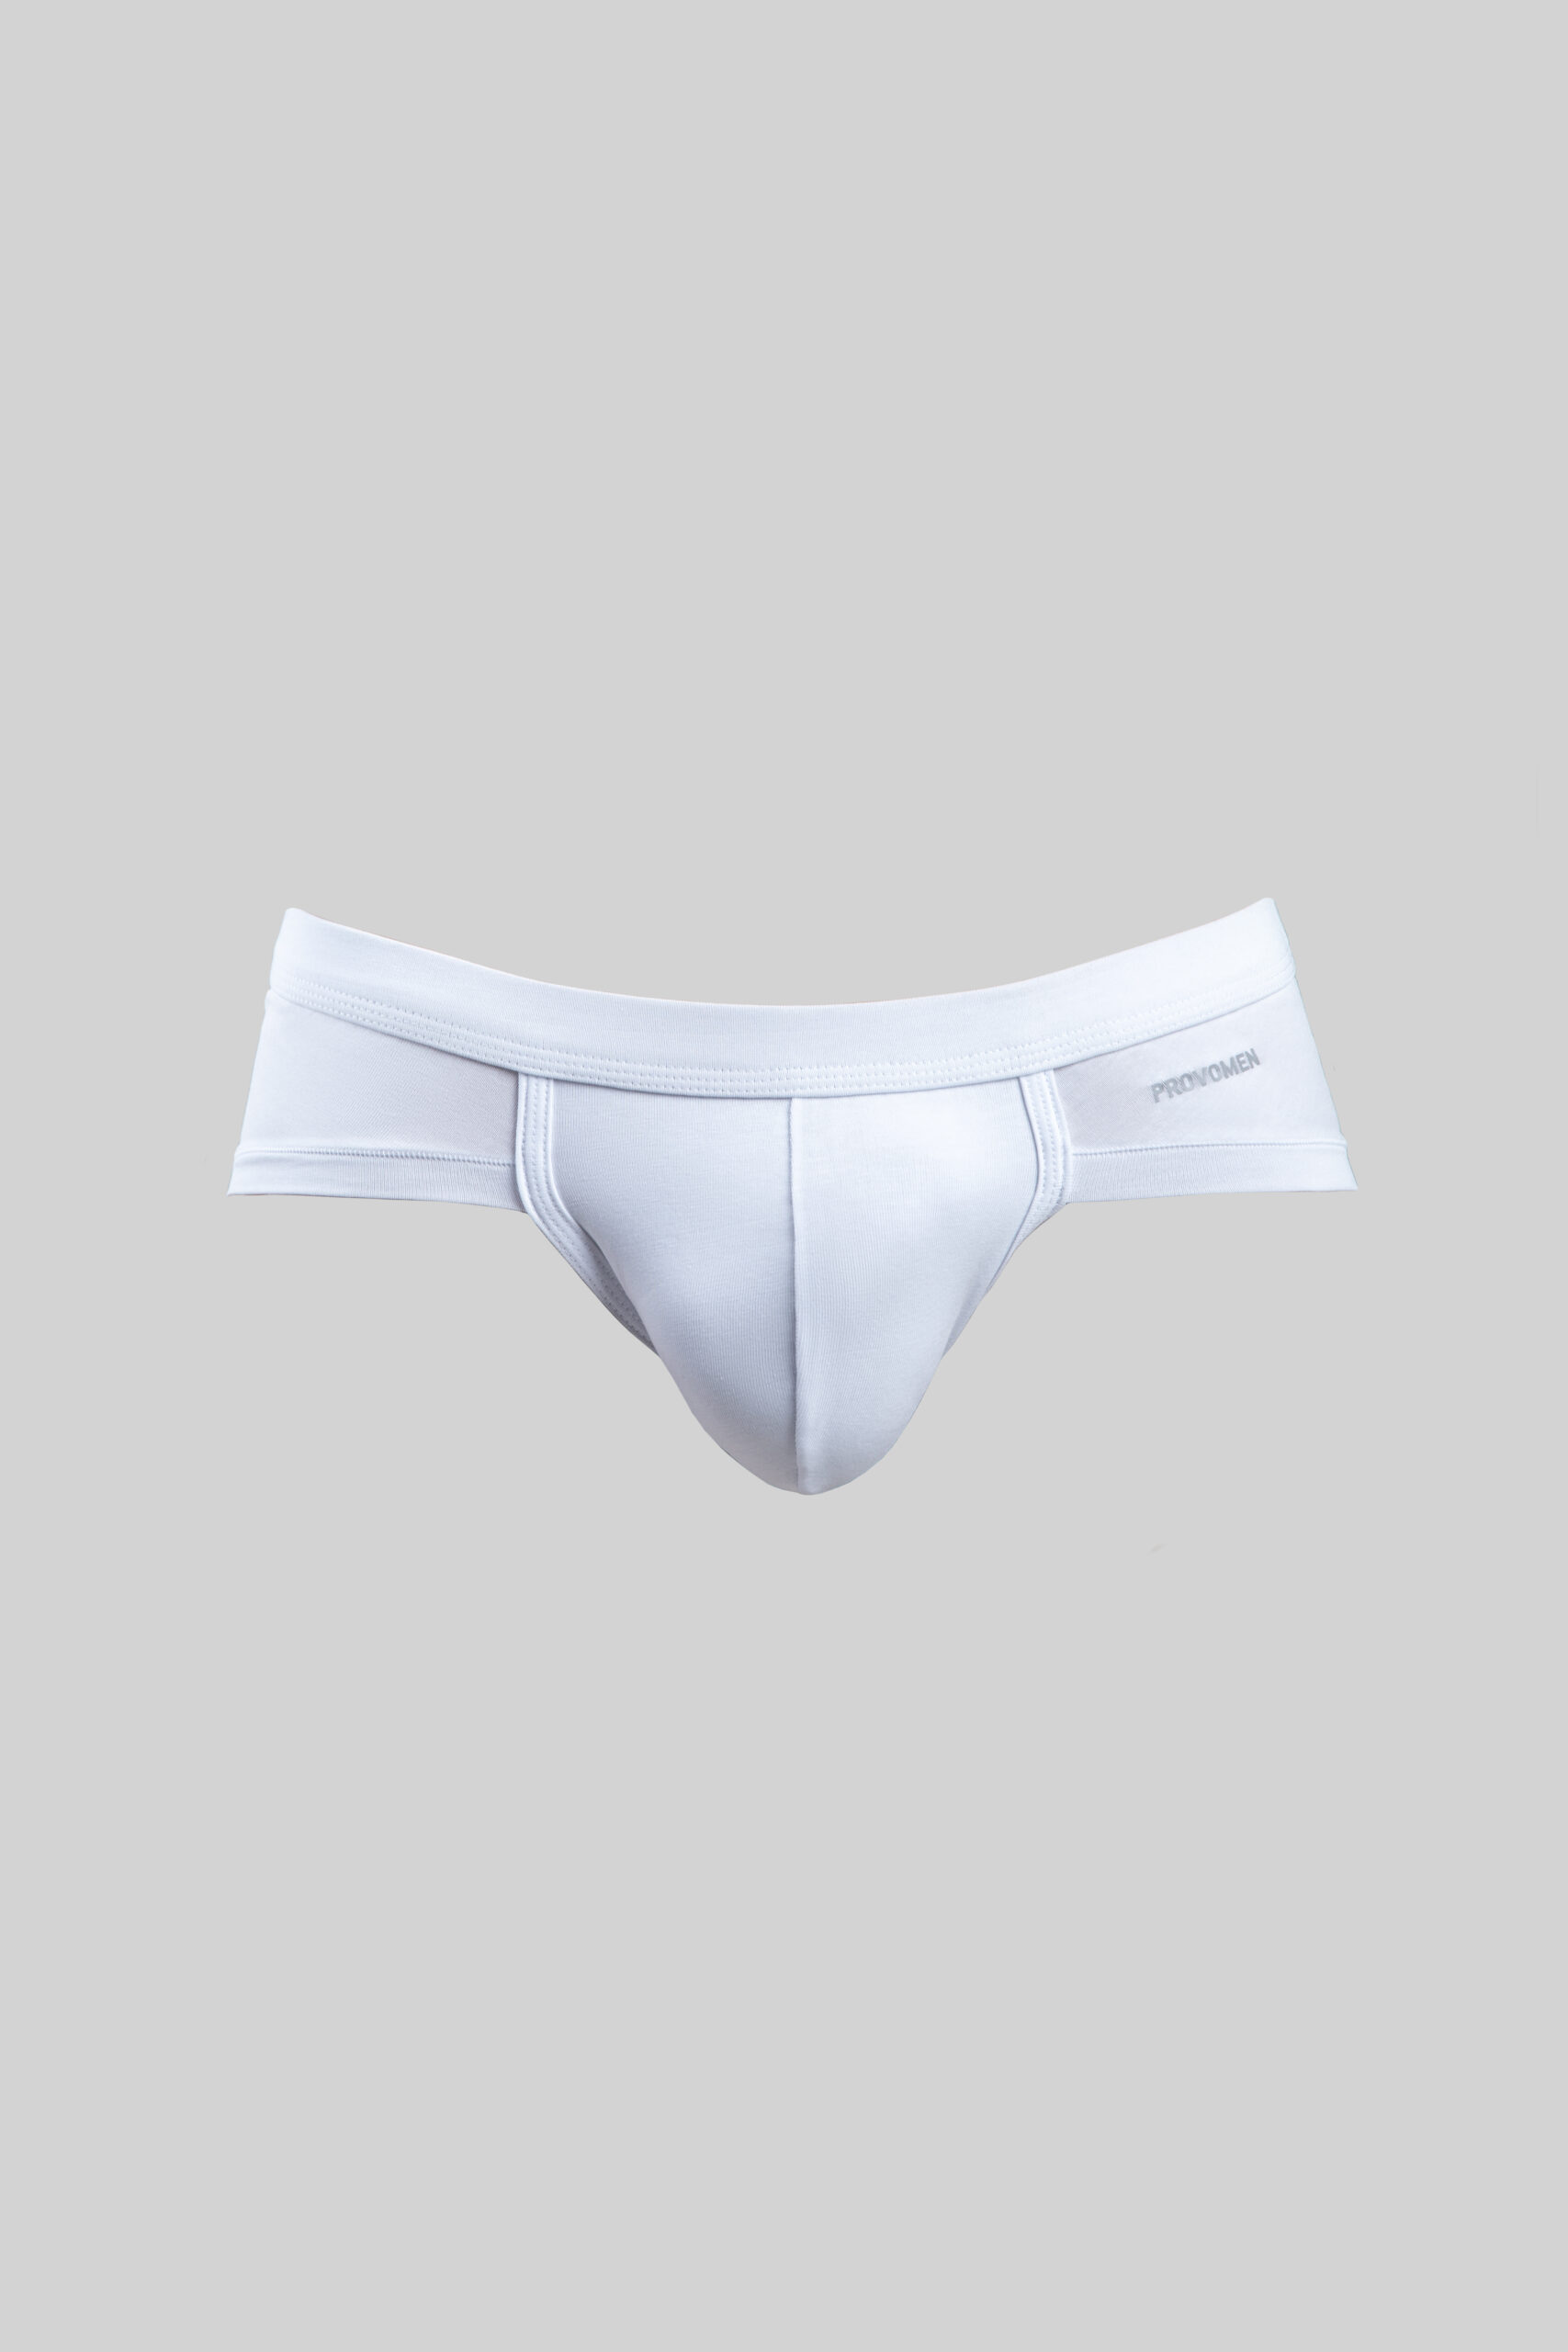 Buy Toot LB51J562 Men's Underwear, White Online Nepal